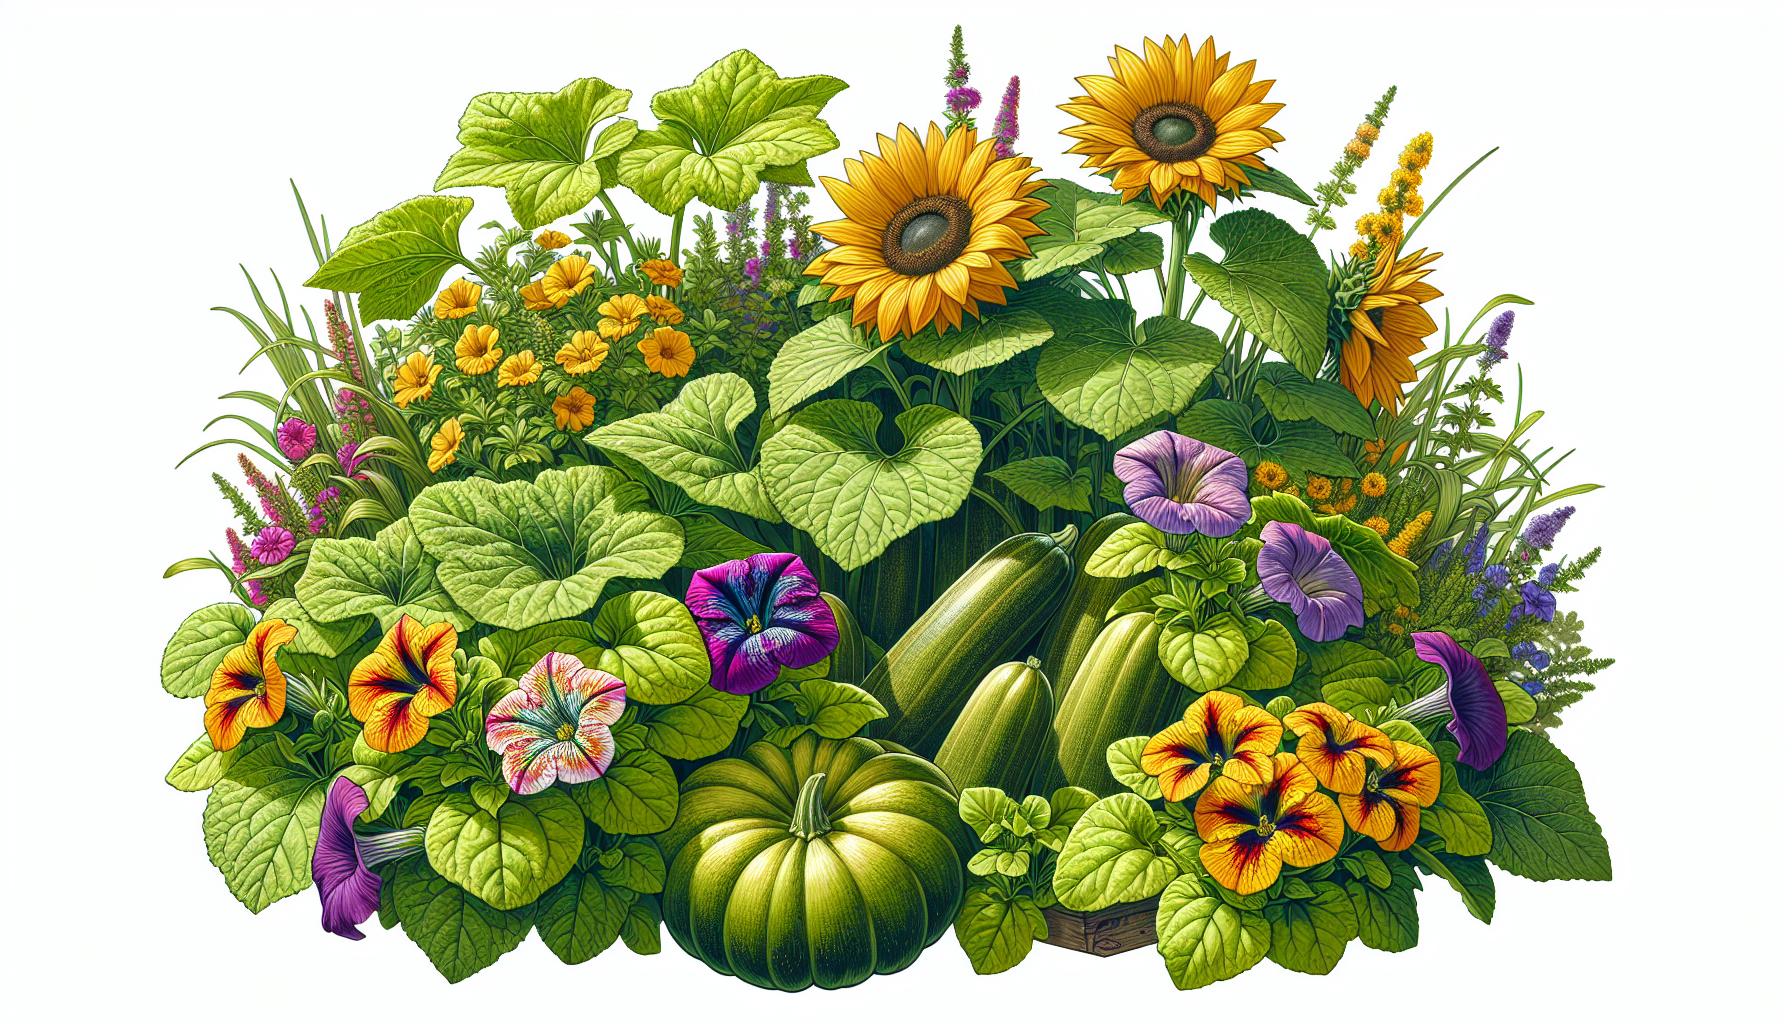 vibrant garden flowers and vegetables